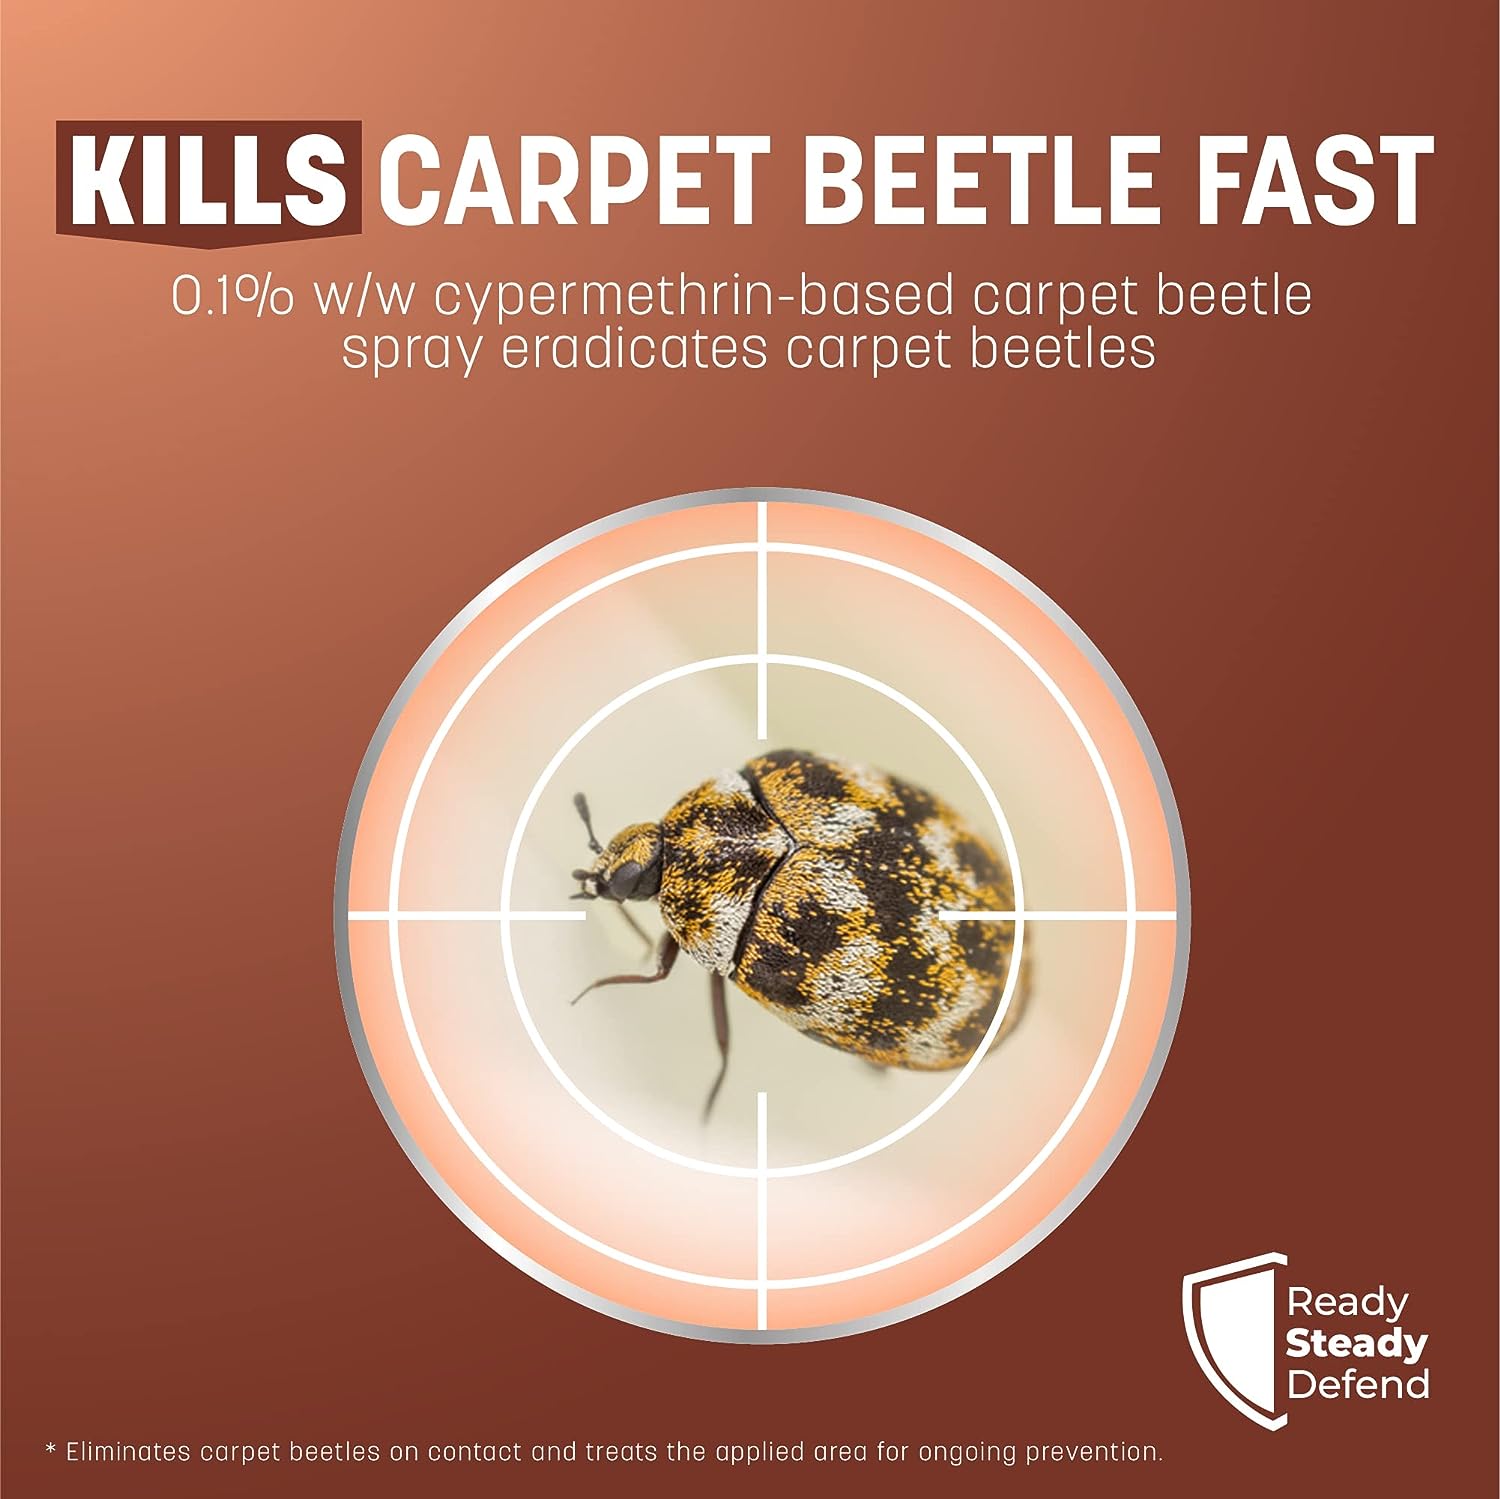 Carpet Beetle Killer Spray (1 Litre)